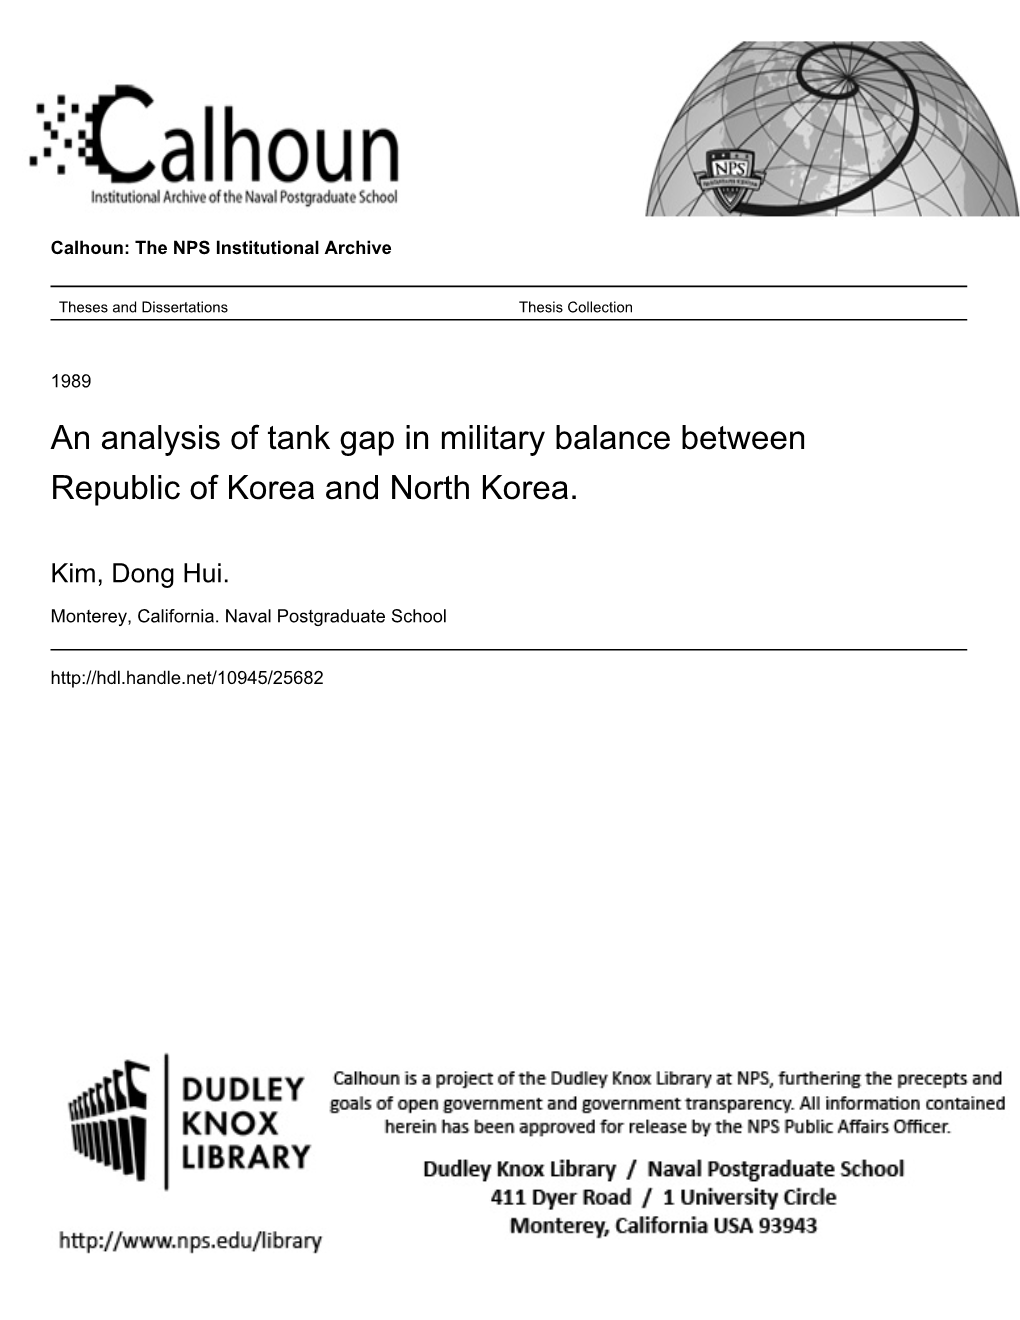 An Analysis of Tank Gap in Military Balance Between Republic of Korea and North Korea